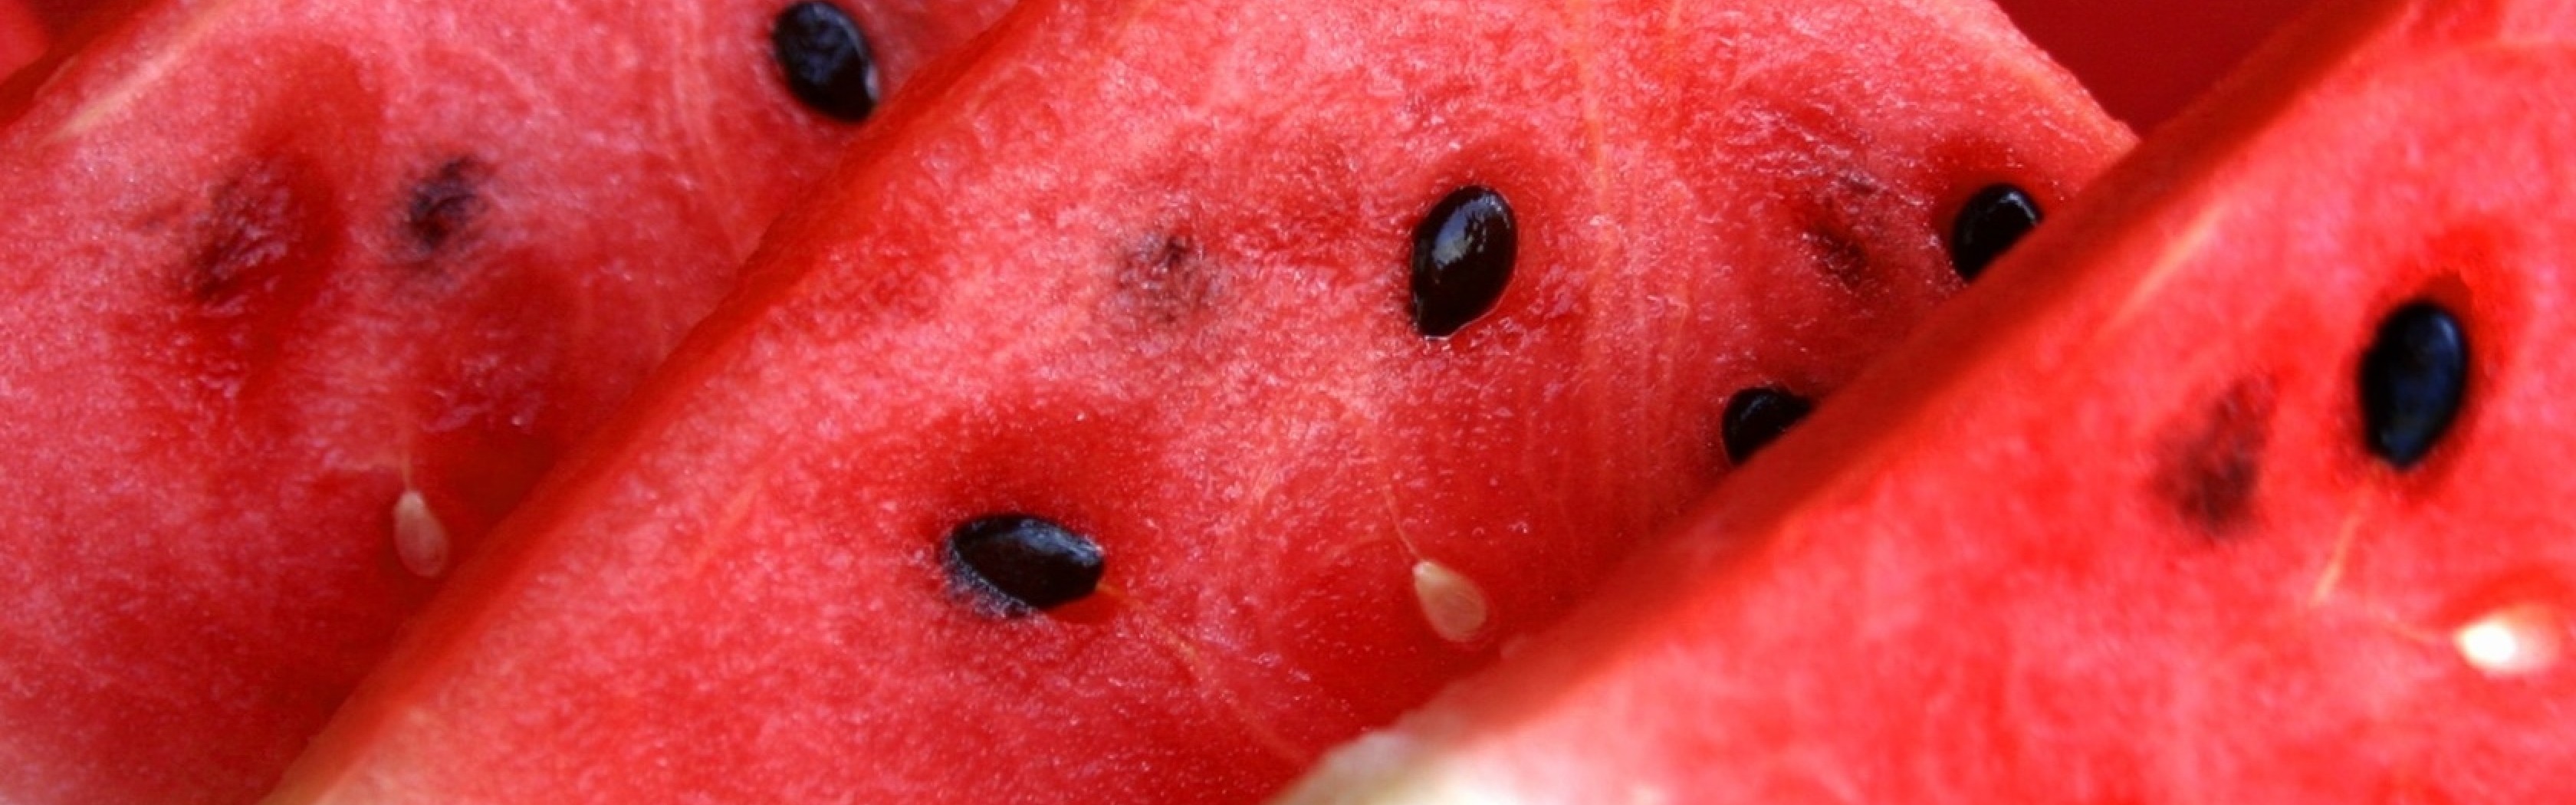 texture, download photo, background, watermelon texture